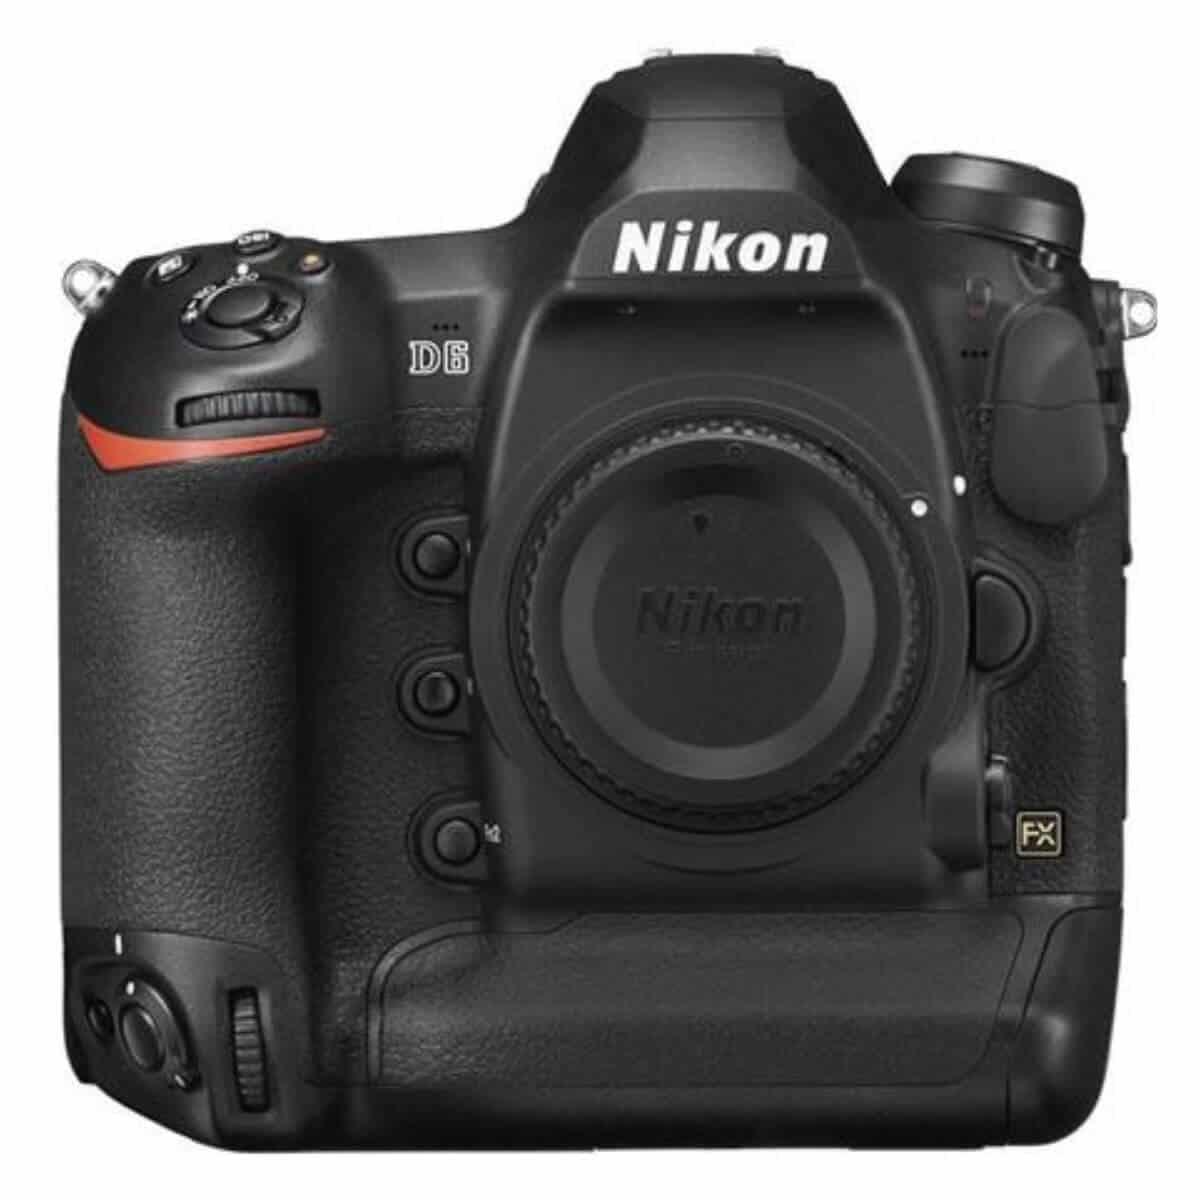 Nikon D6 camera without the lens.